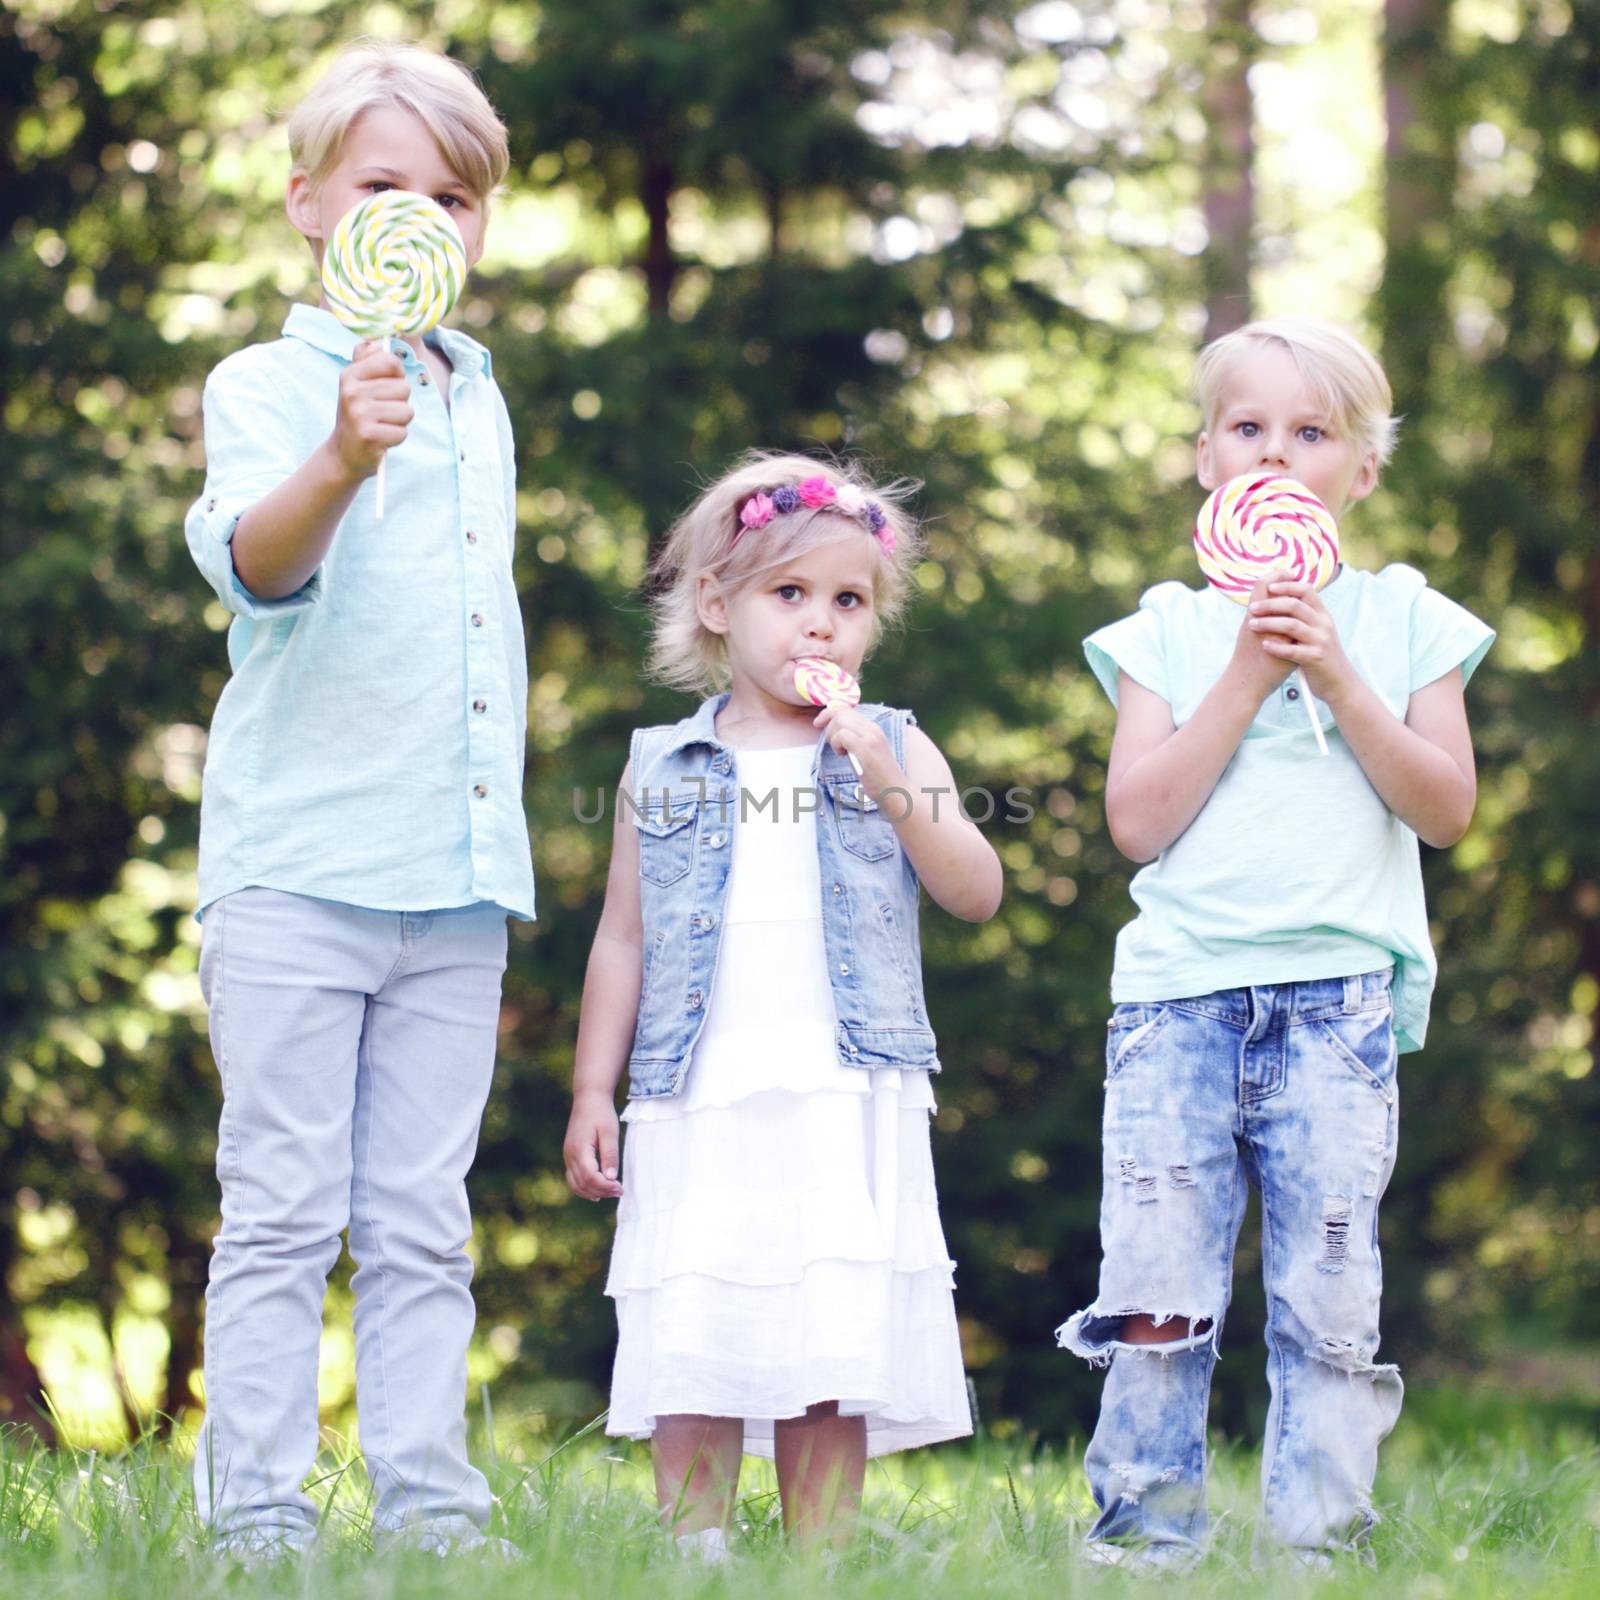 Group of happy children eating lollipops outdoors in summer park